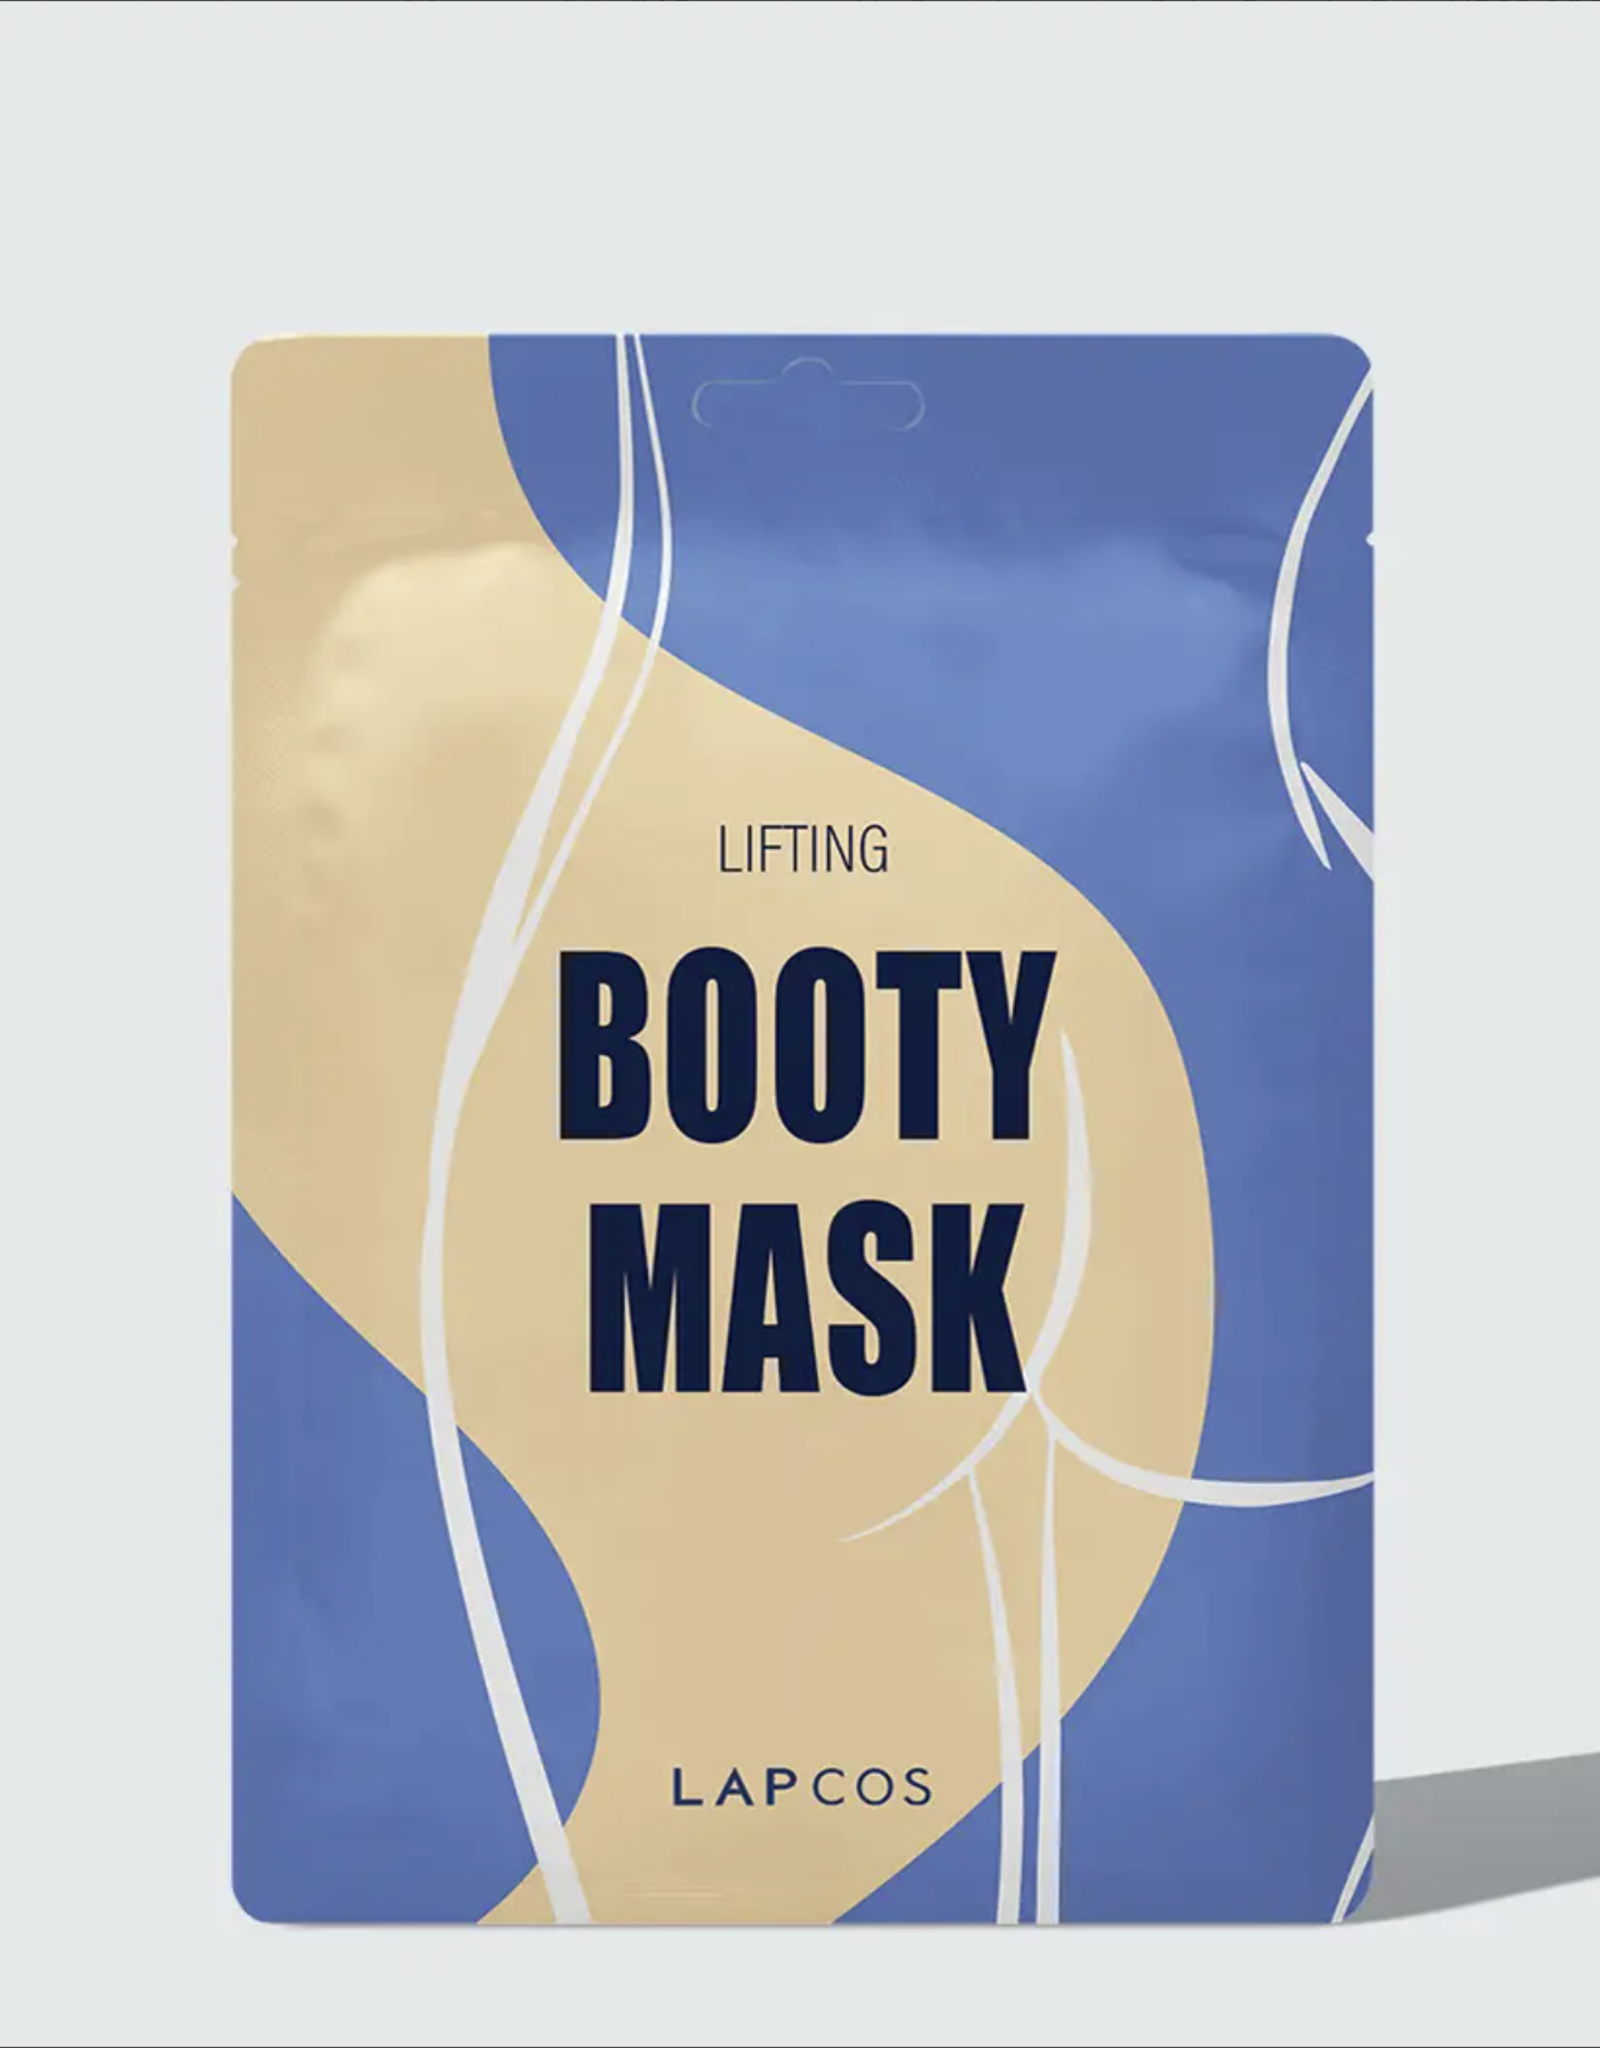 Lifting Booty Mask